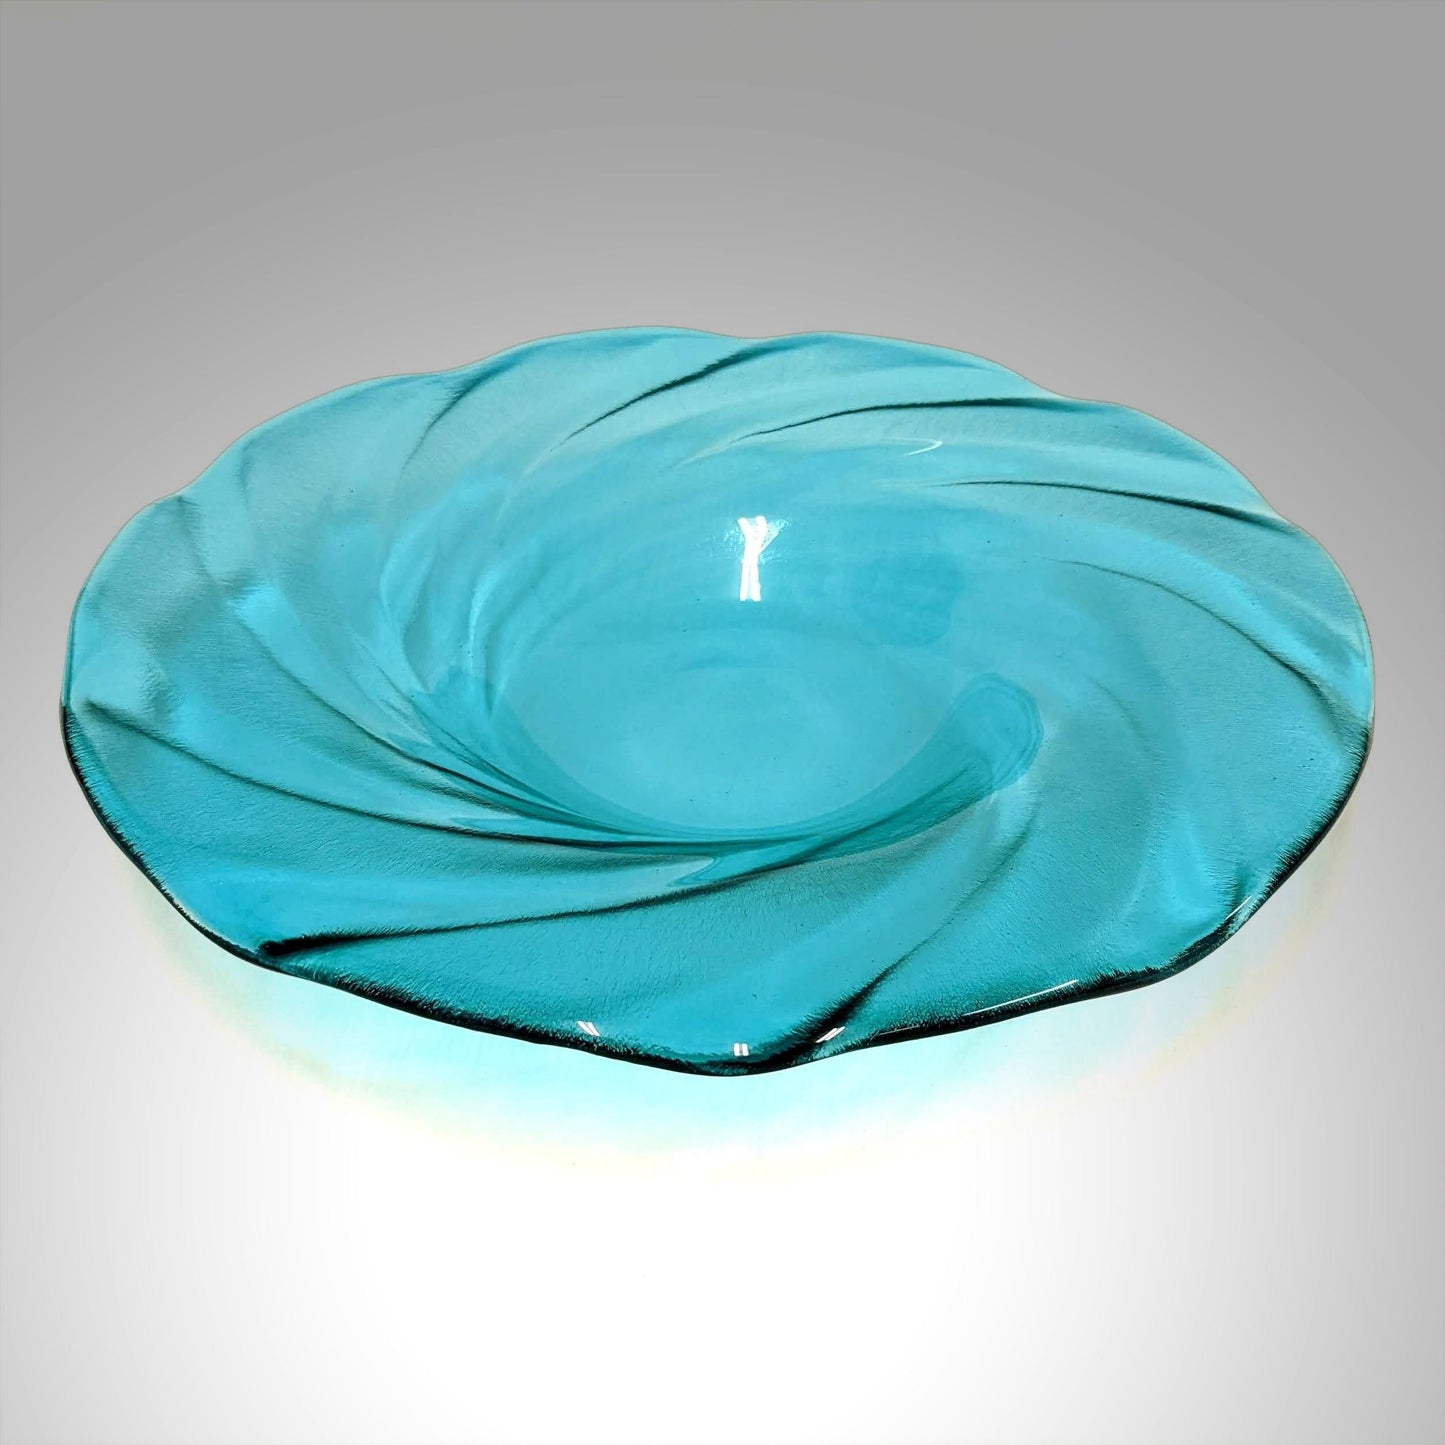 Glass Art Fruit Bowl in Aquamarine Blue Green | Contemporary Glass Art